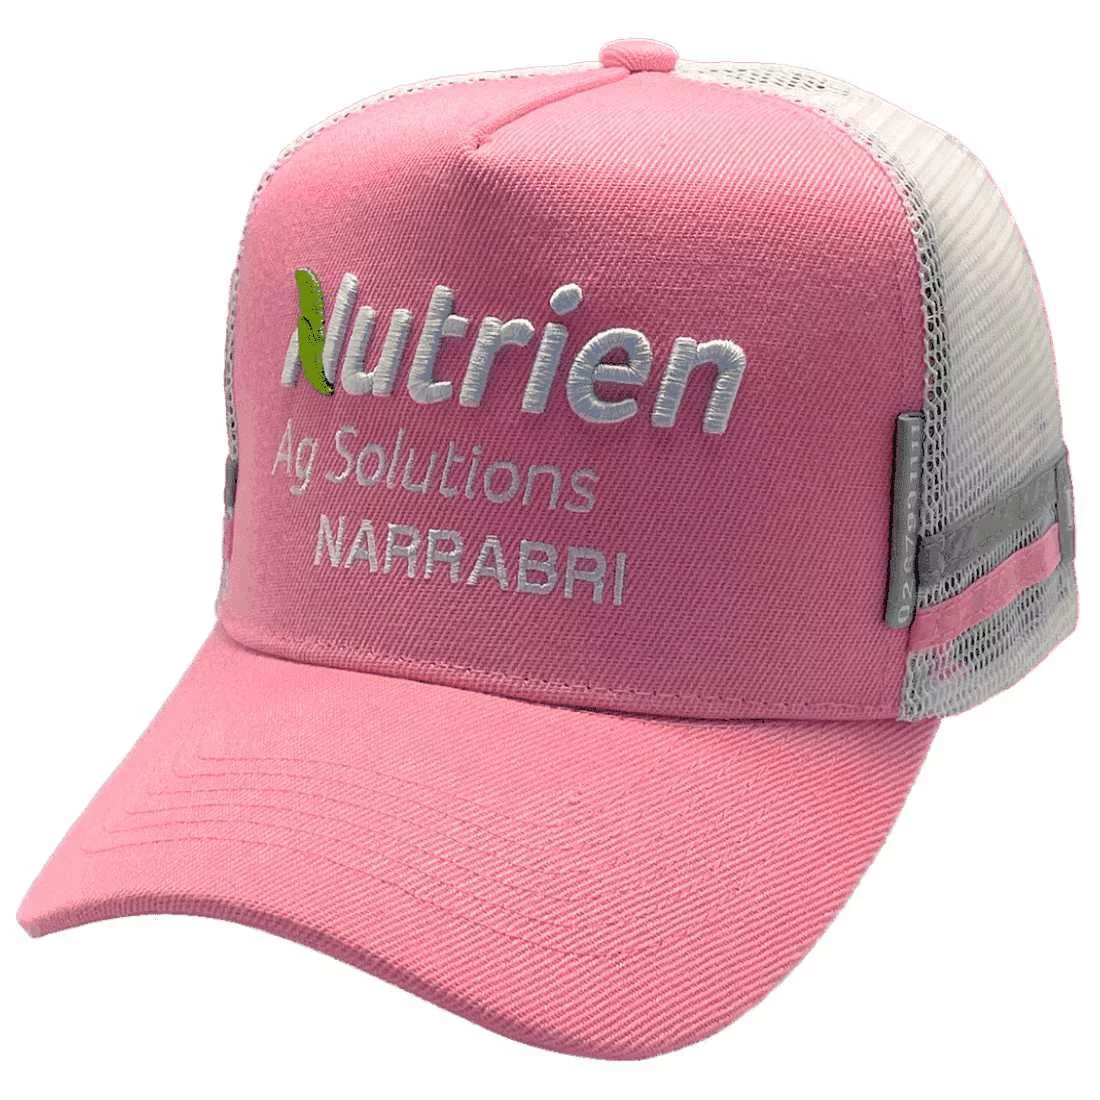 Nutrien Ag Solutions Narrabri HP - Midrange Aussie Trucker Hat Acrylic Pink/White/Grey